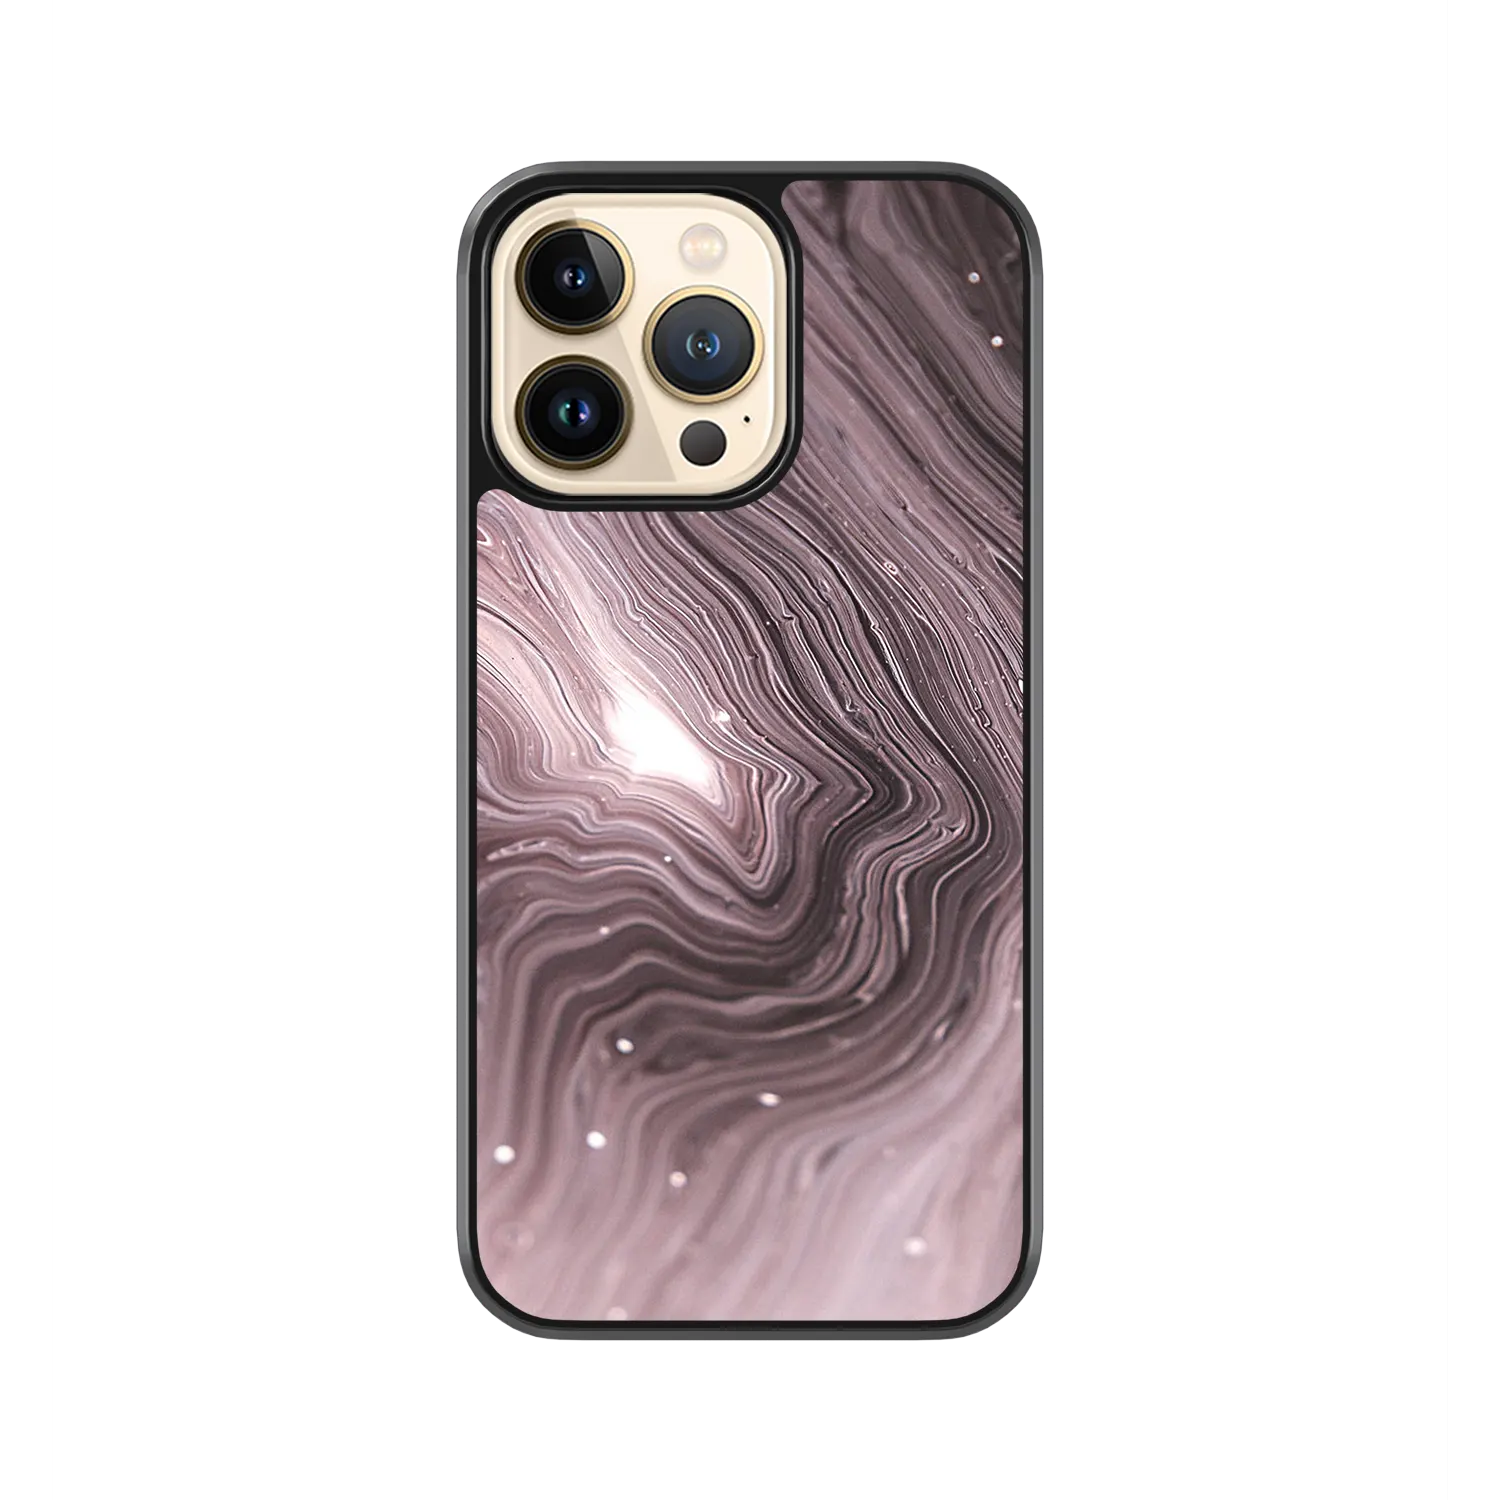 Champagne Nebula iPhone 11 Pro Max Case